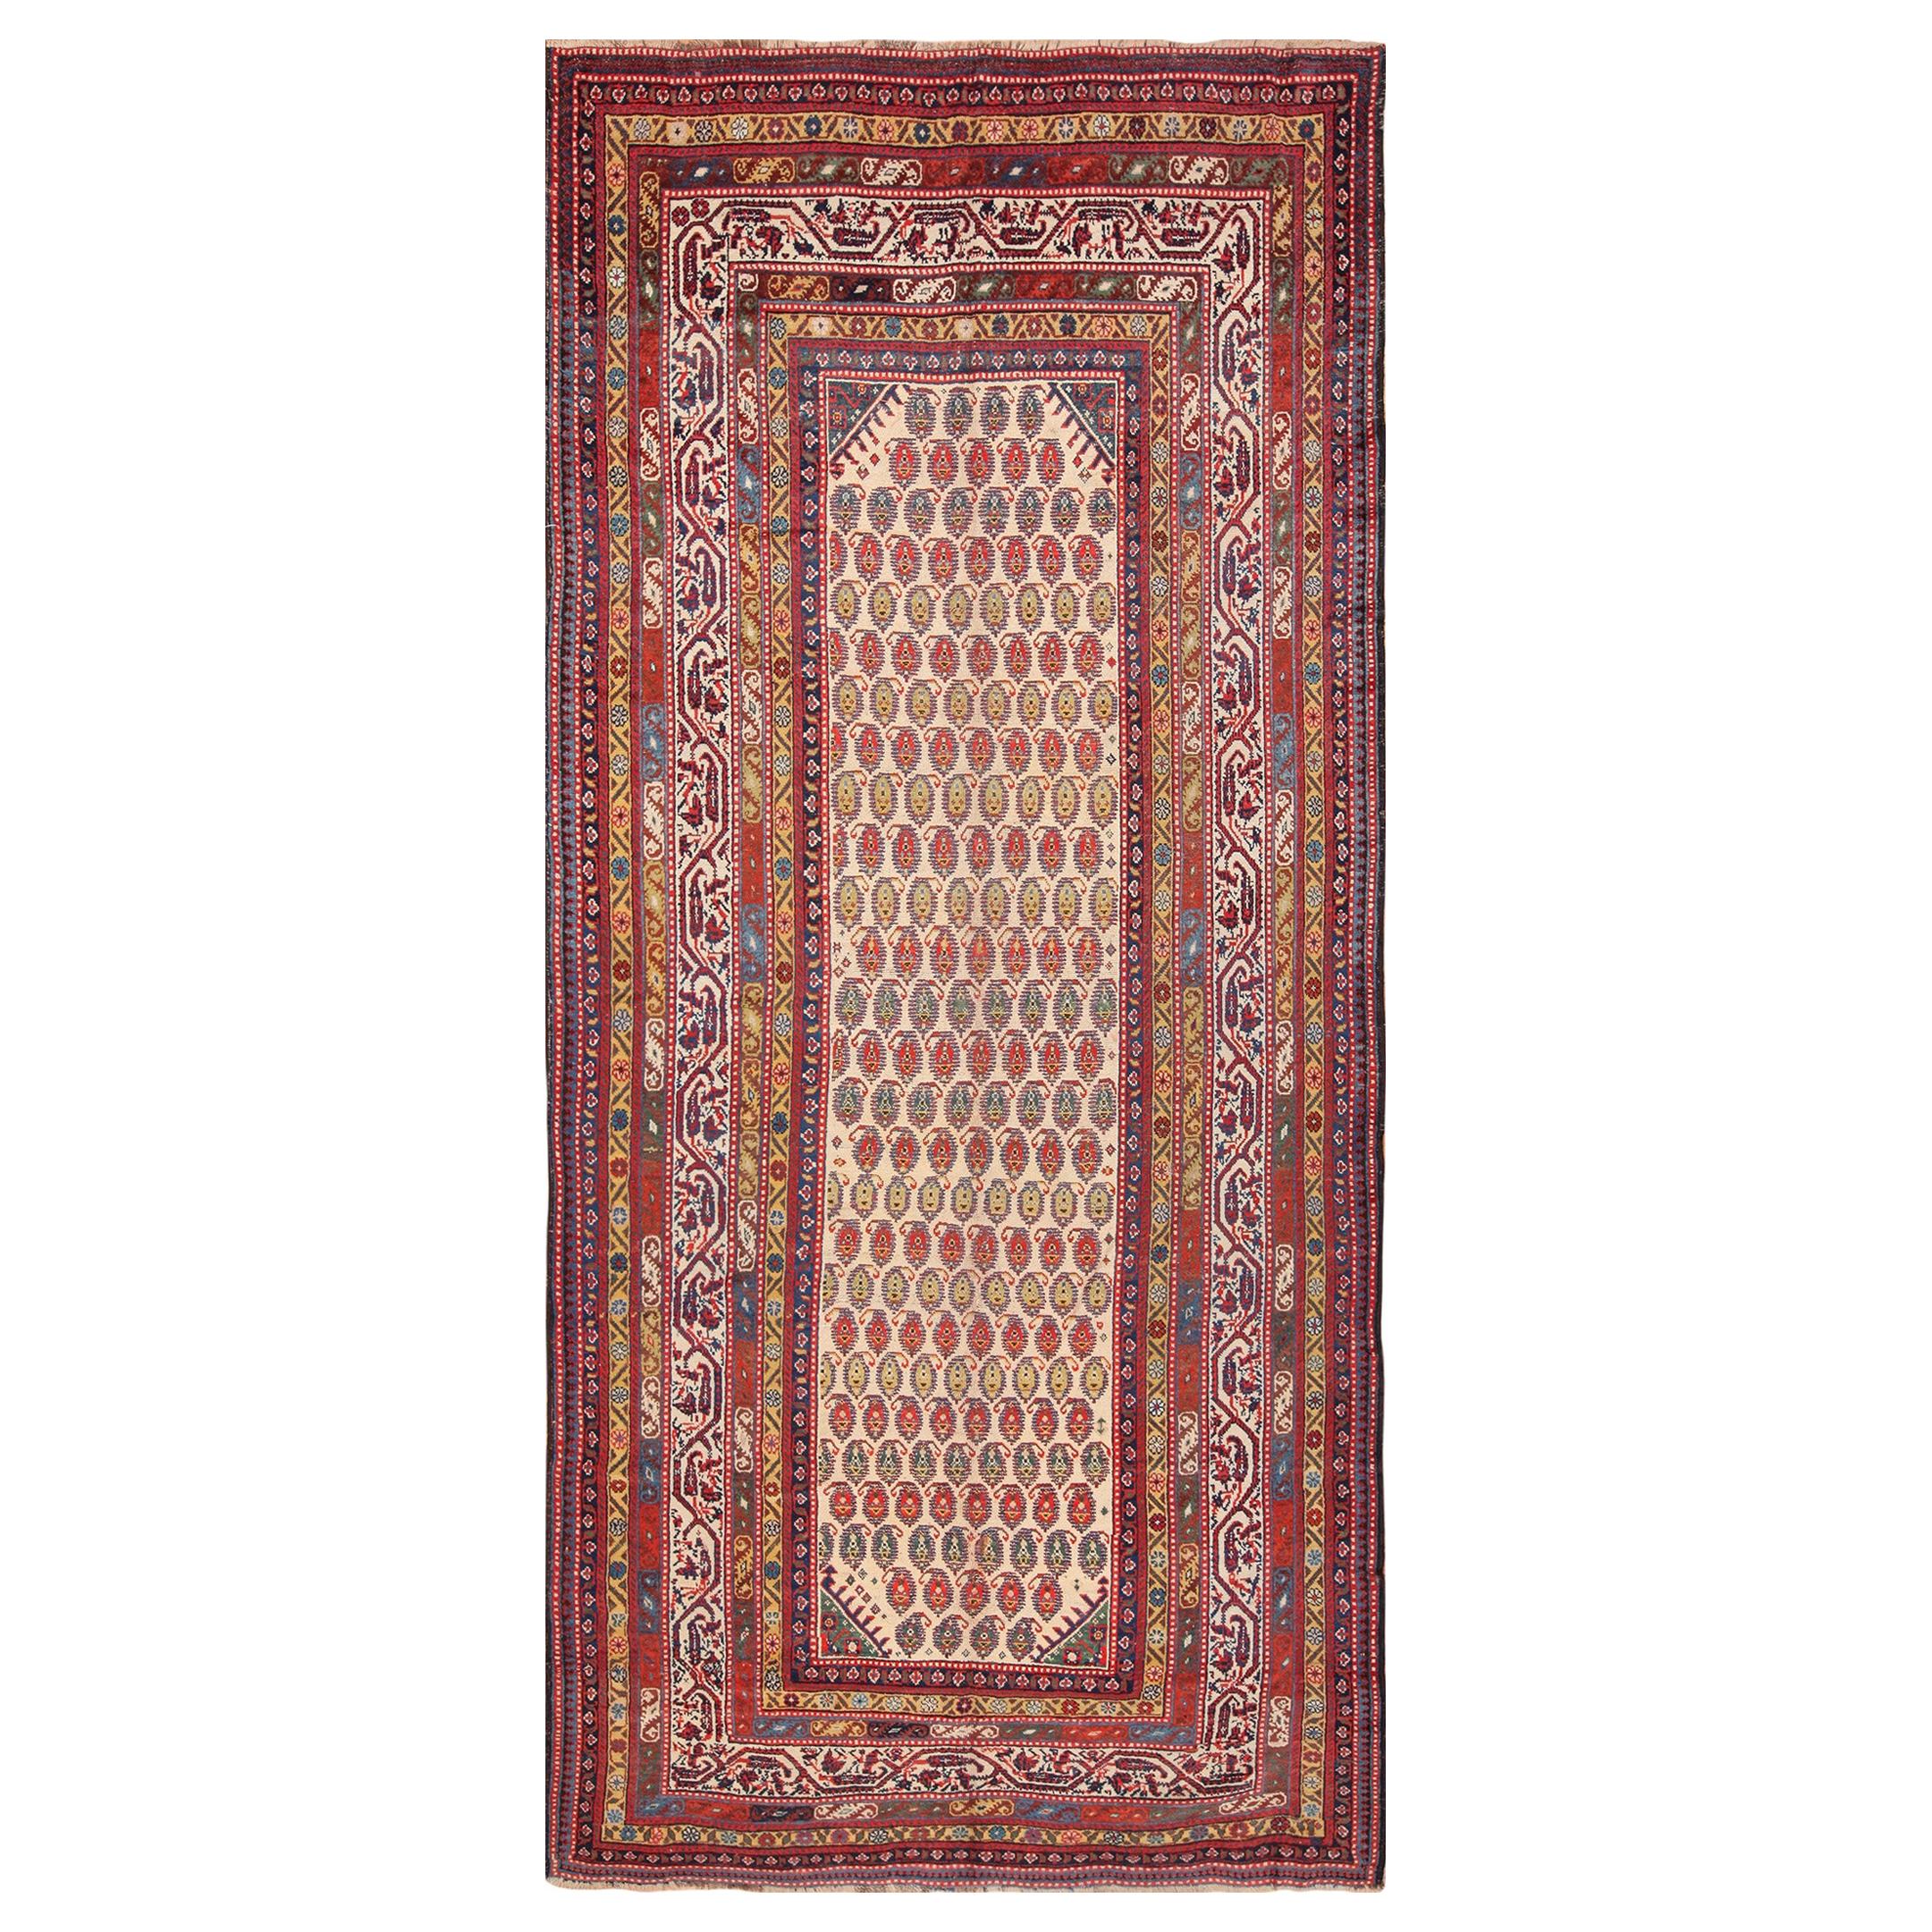 Antique Tribal Persian Serebend Runner Rug. 6' 3" x 13' 6" 